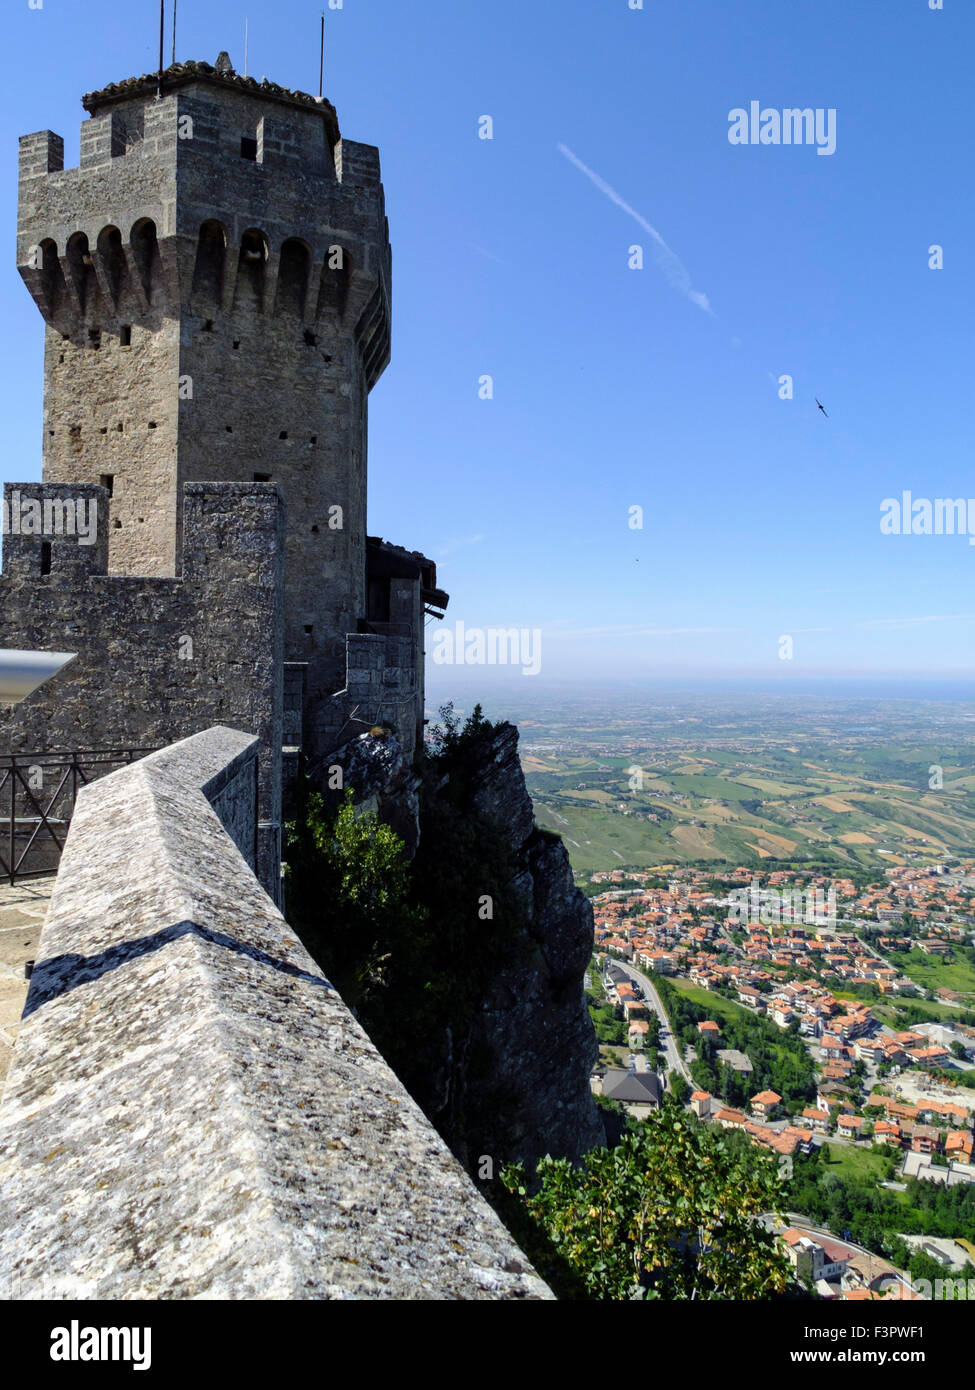 Italy, Emilia-Romagna, Republic of San Marino - the fortress on the craggy rock. Stock Photo